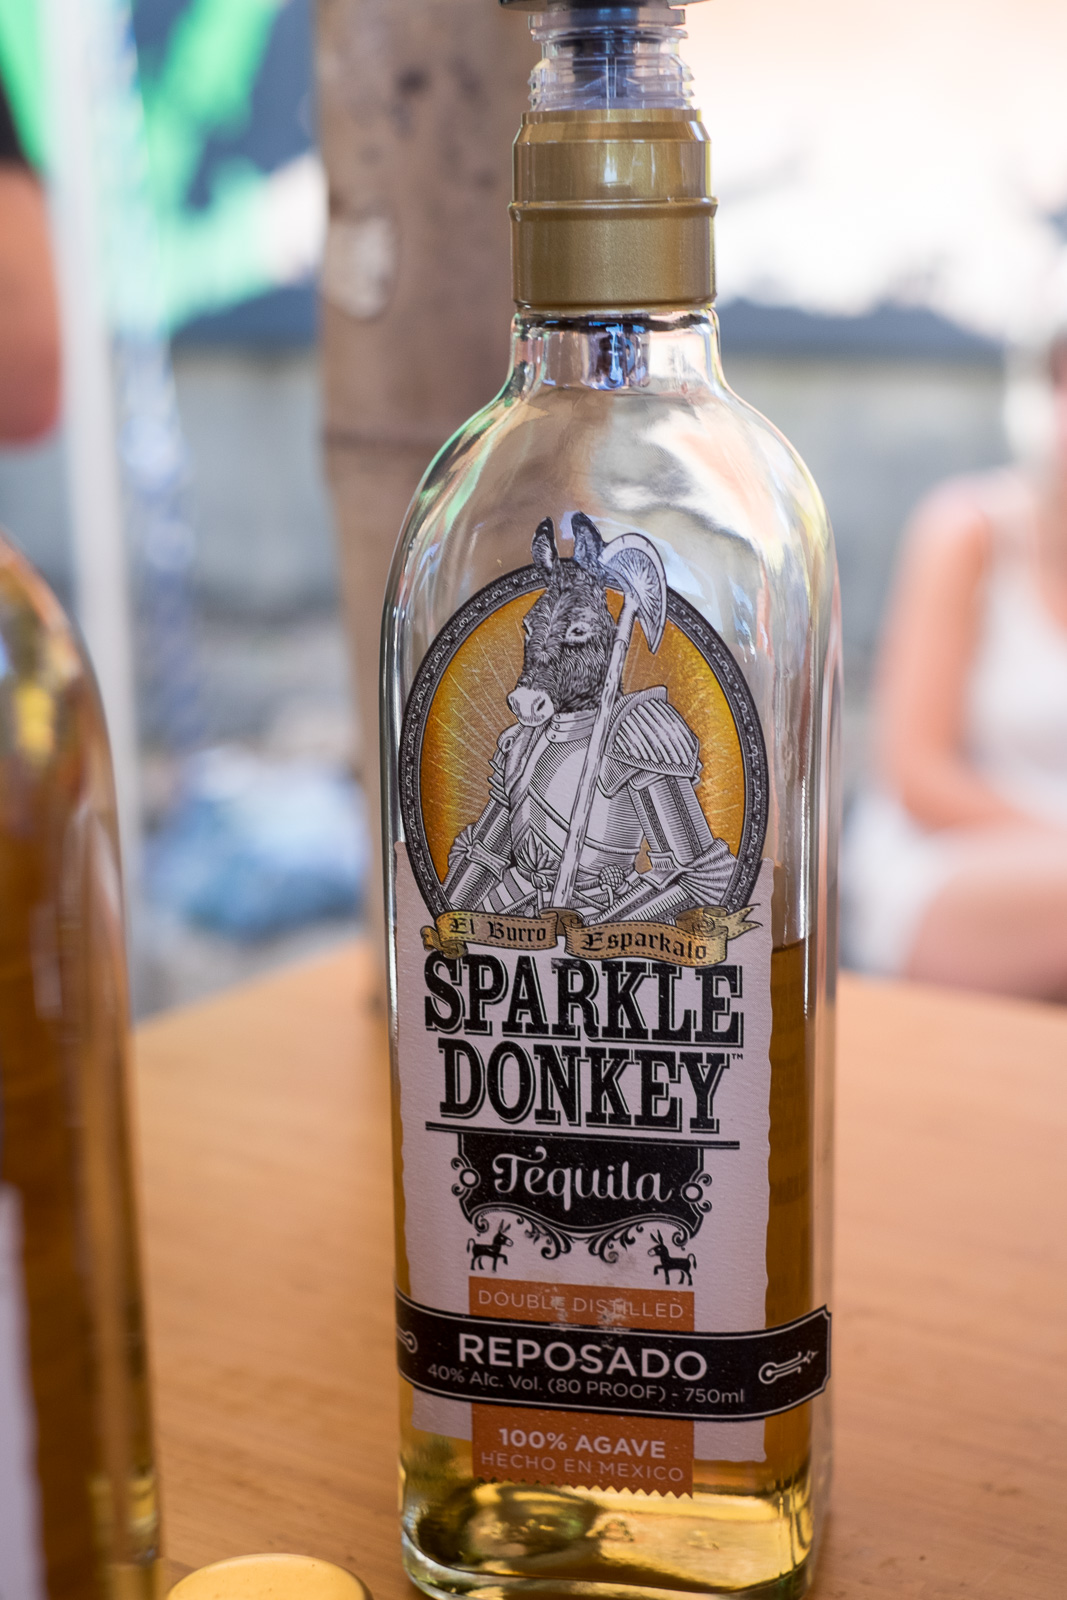 Sparkle donkey